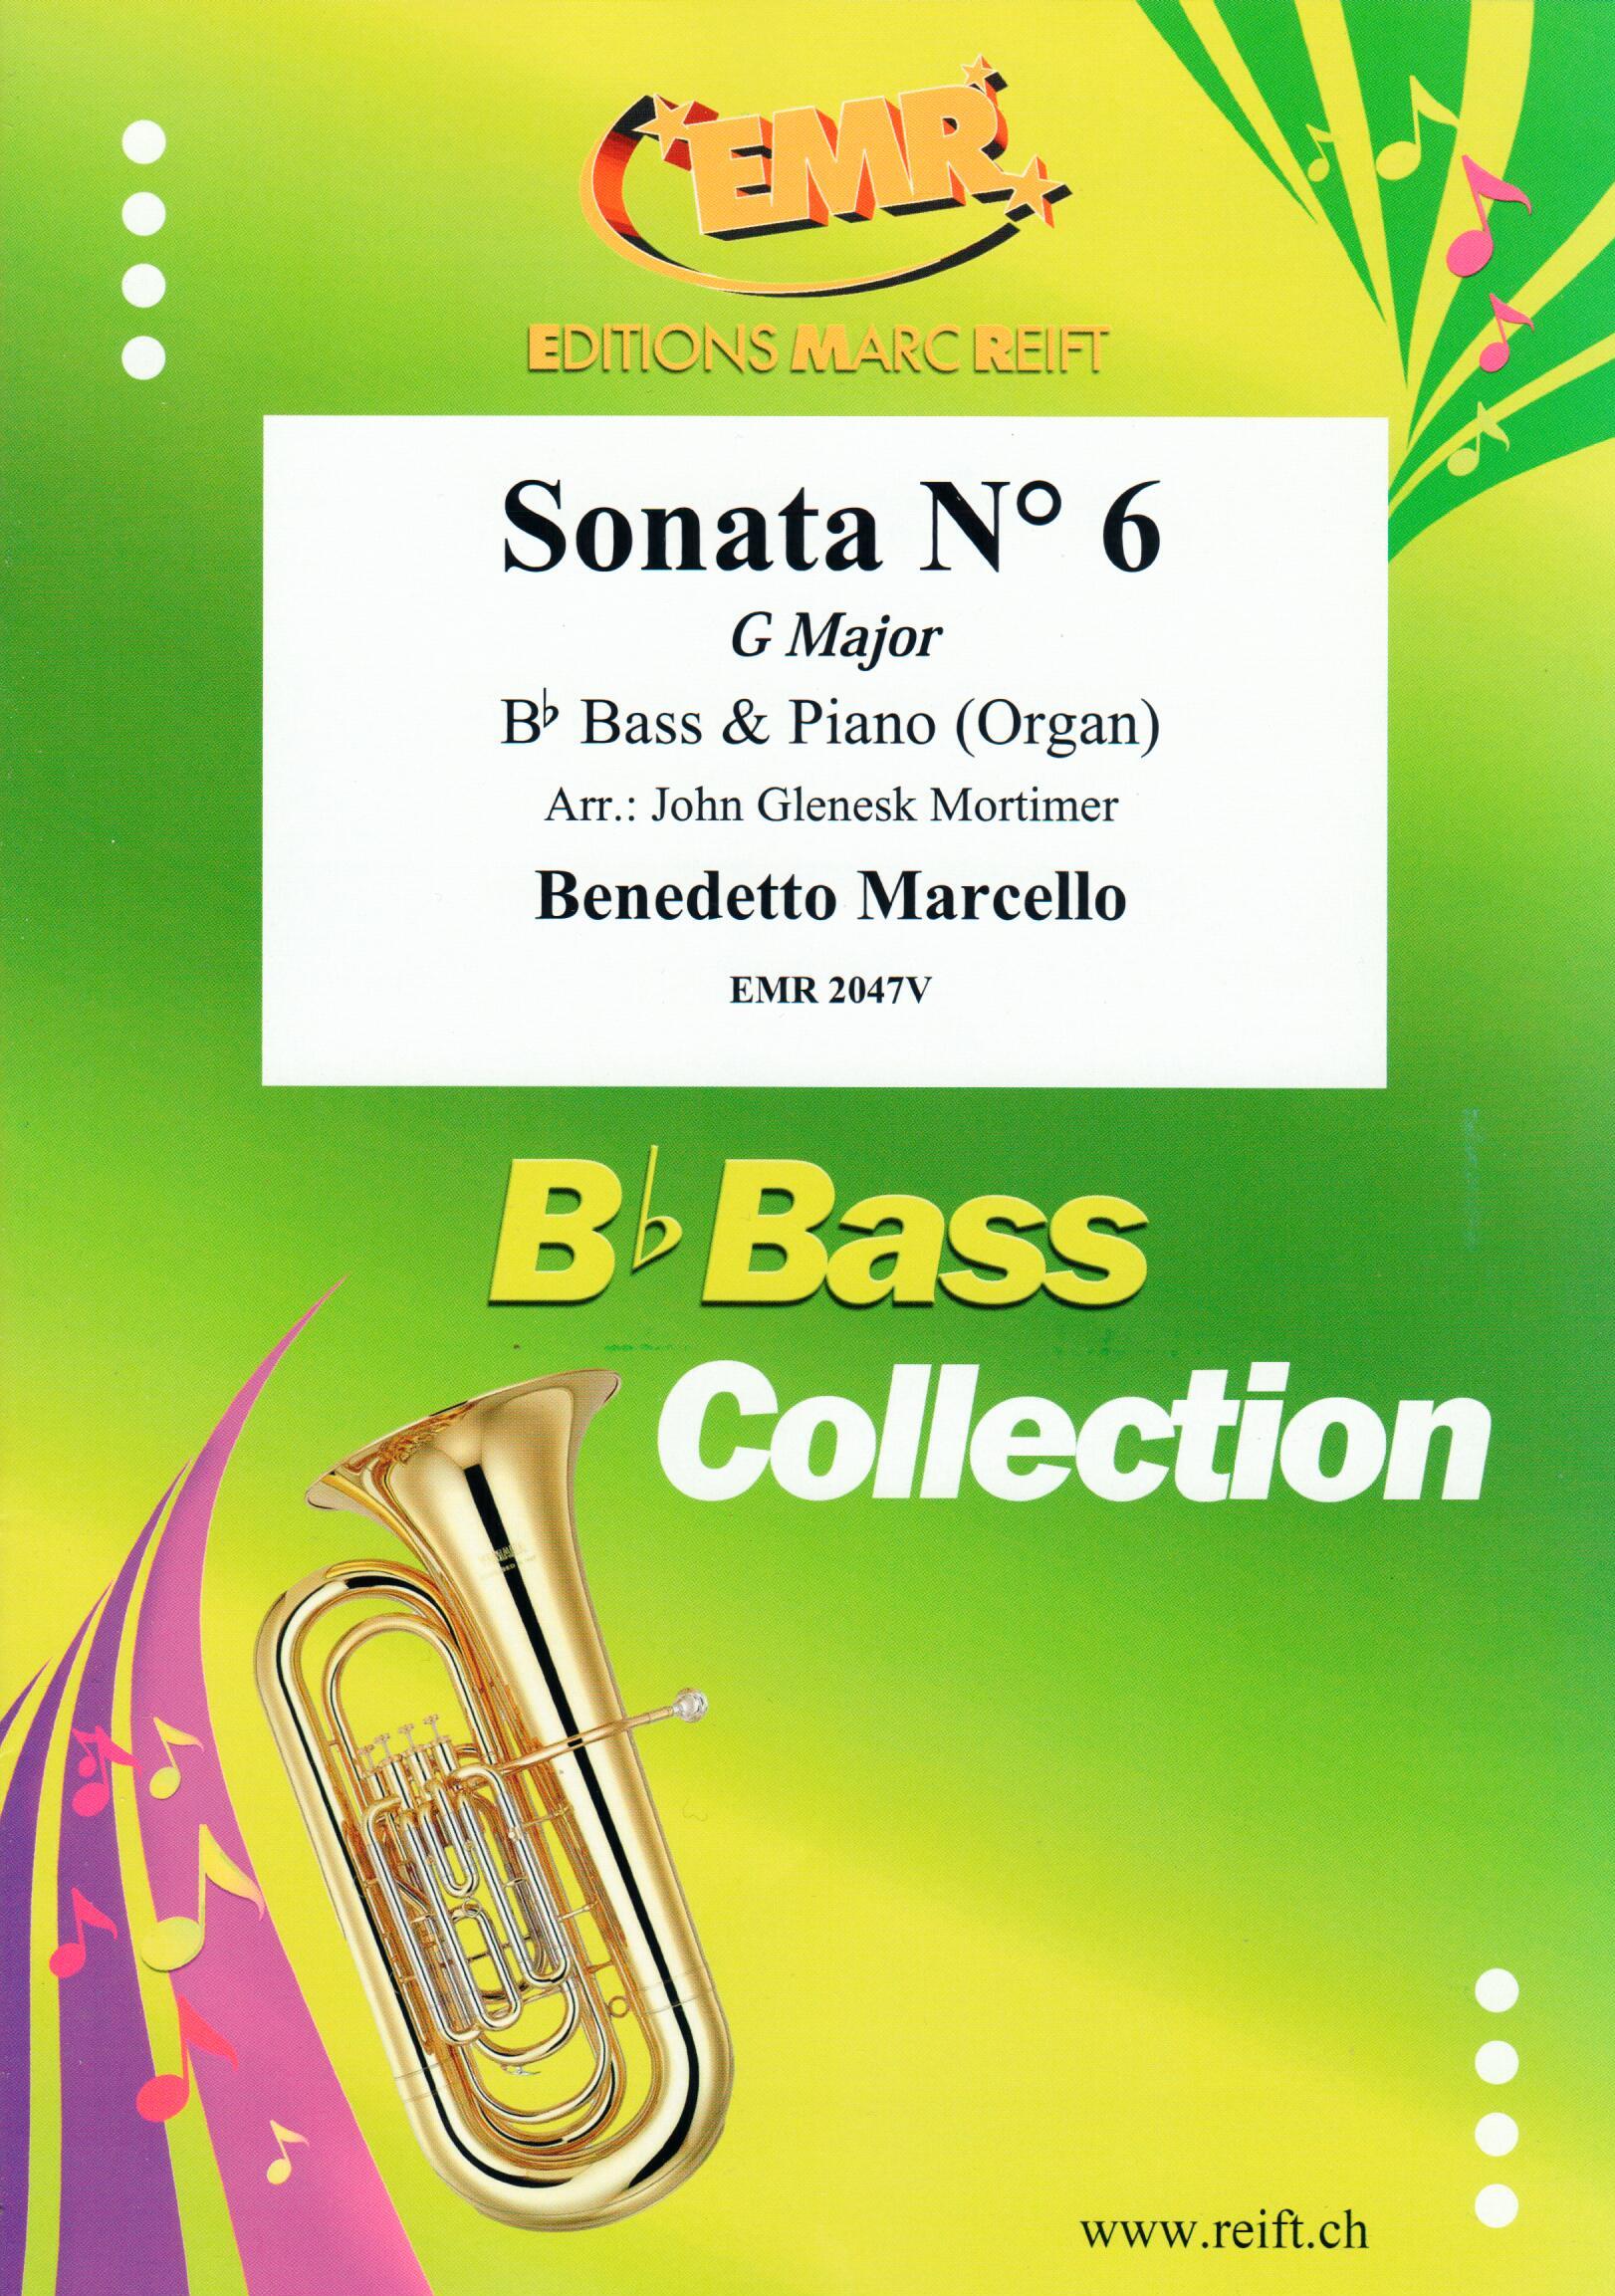 SONATA N° 6 IN G MAJOR, SOLOS - E♭. Bass